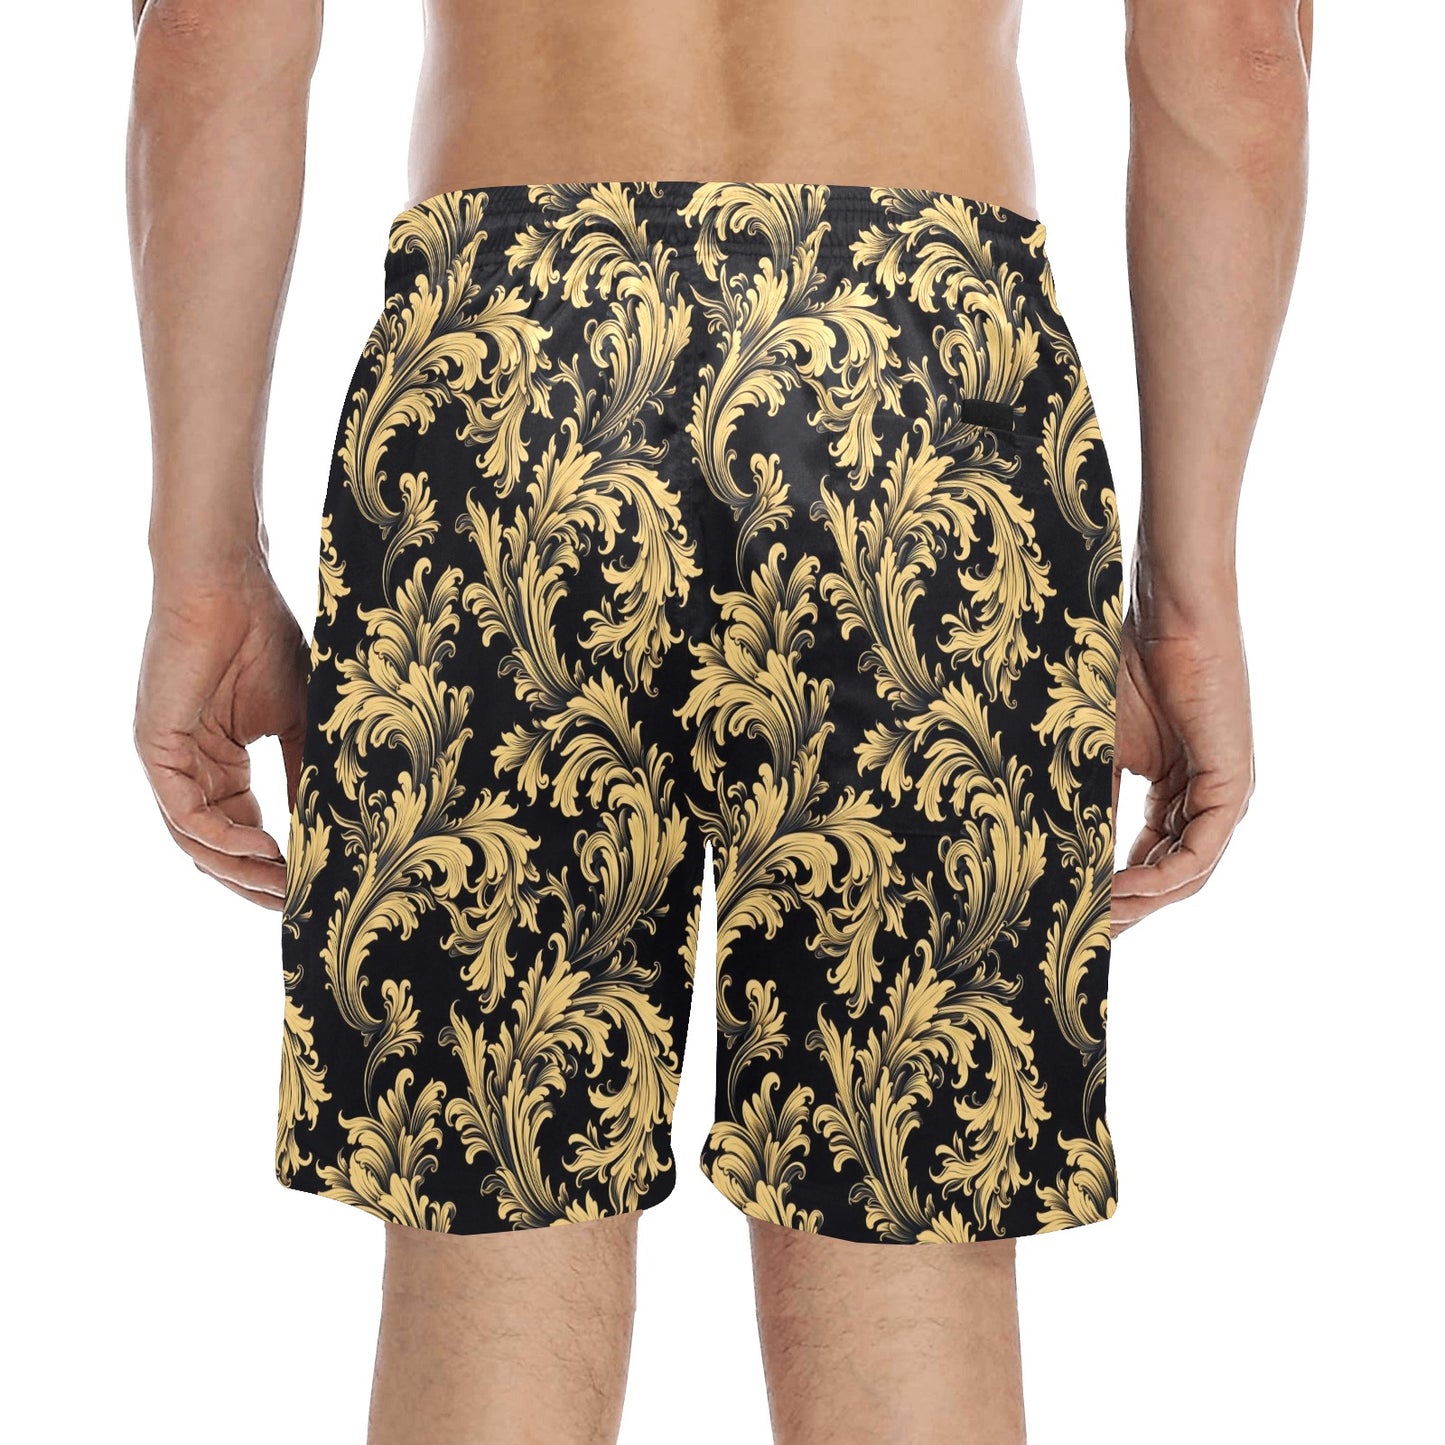 Baroque Men Swim Trunks, 7" Inseam Shorts Black Gold Ornate Beach Pockets Mesh Lining Drawstring Casual Bathing Suit Plus Size Swimwear Guys